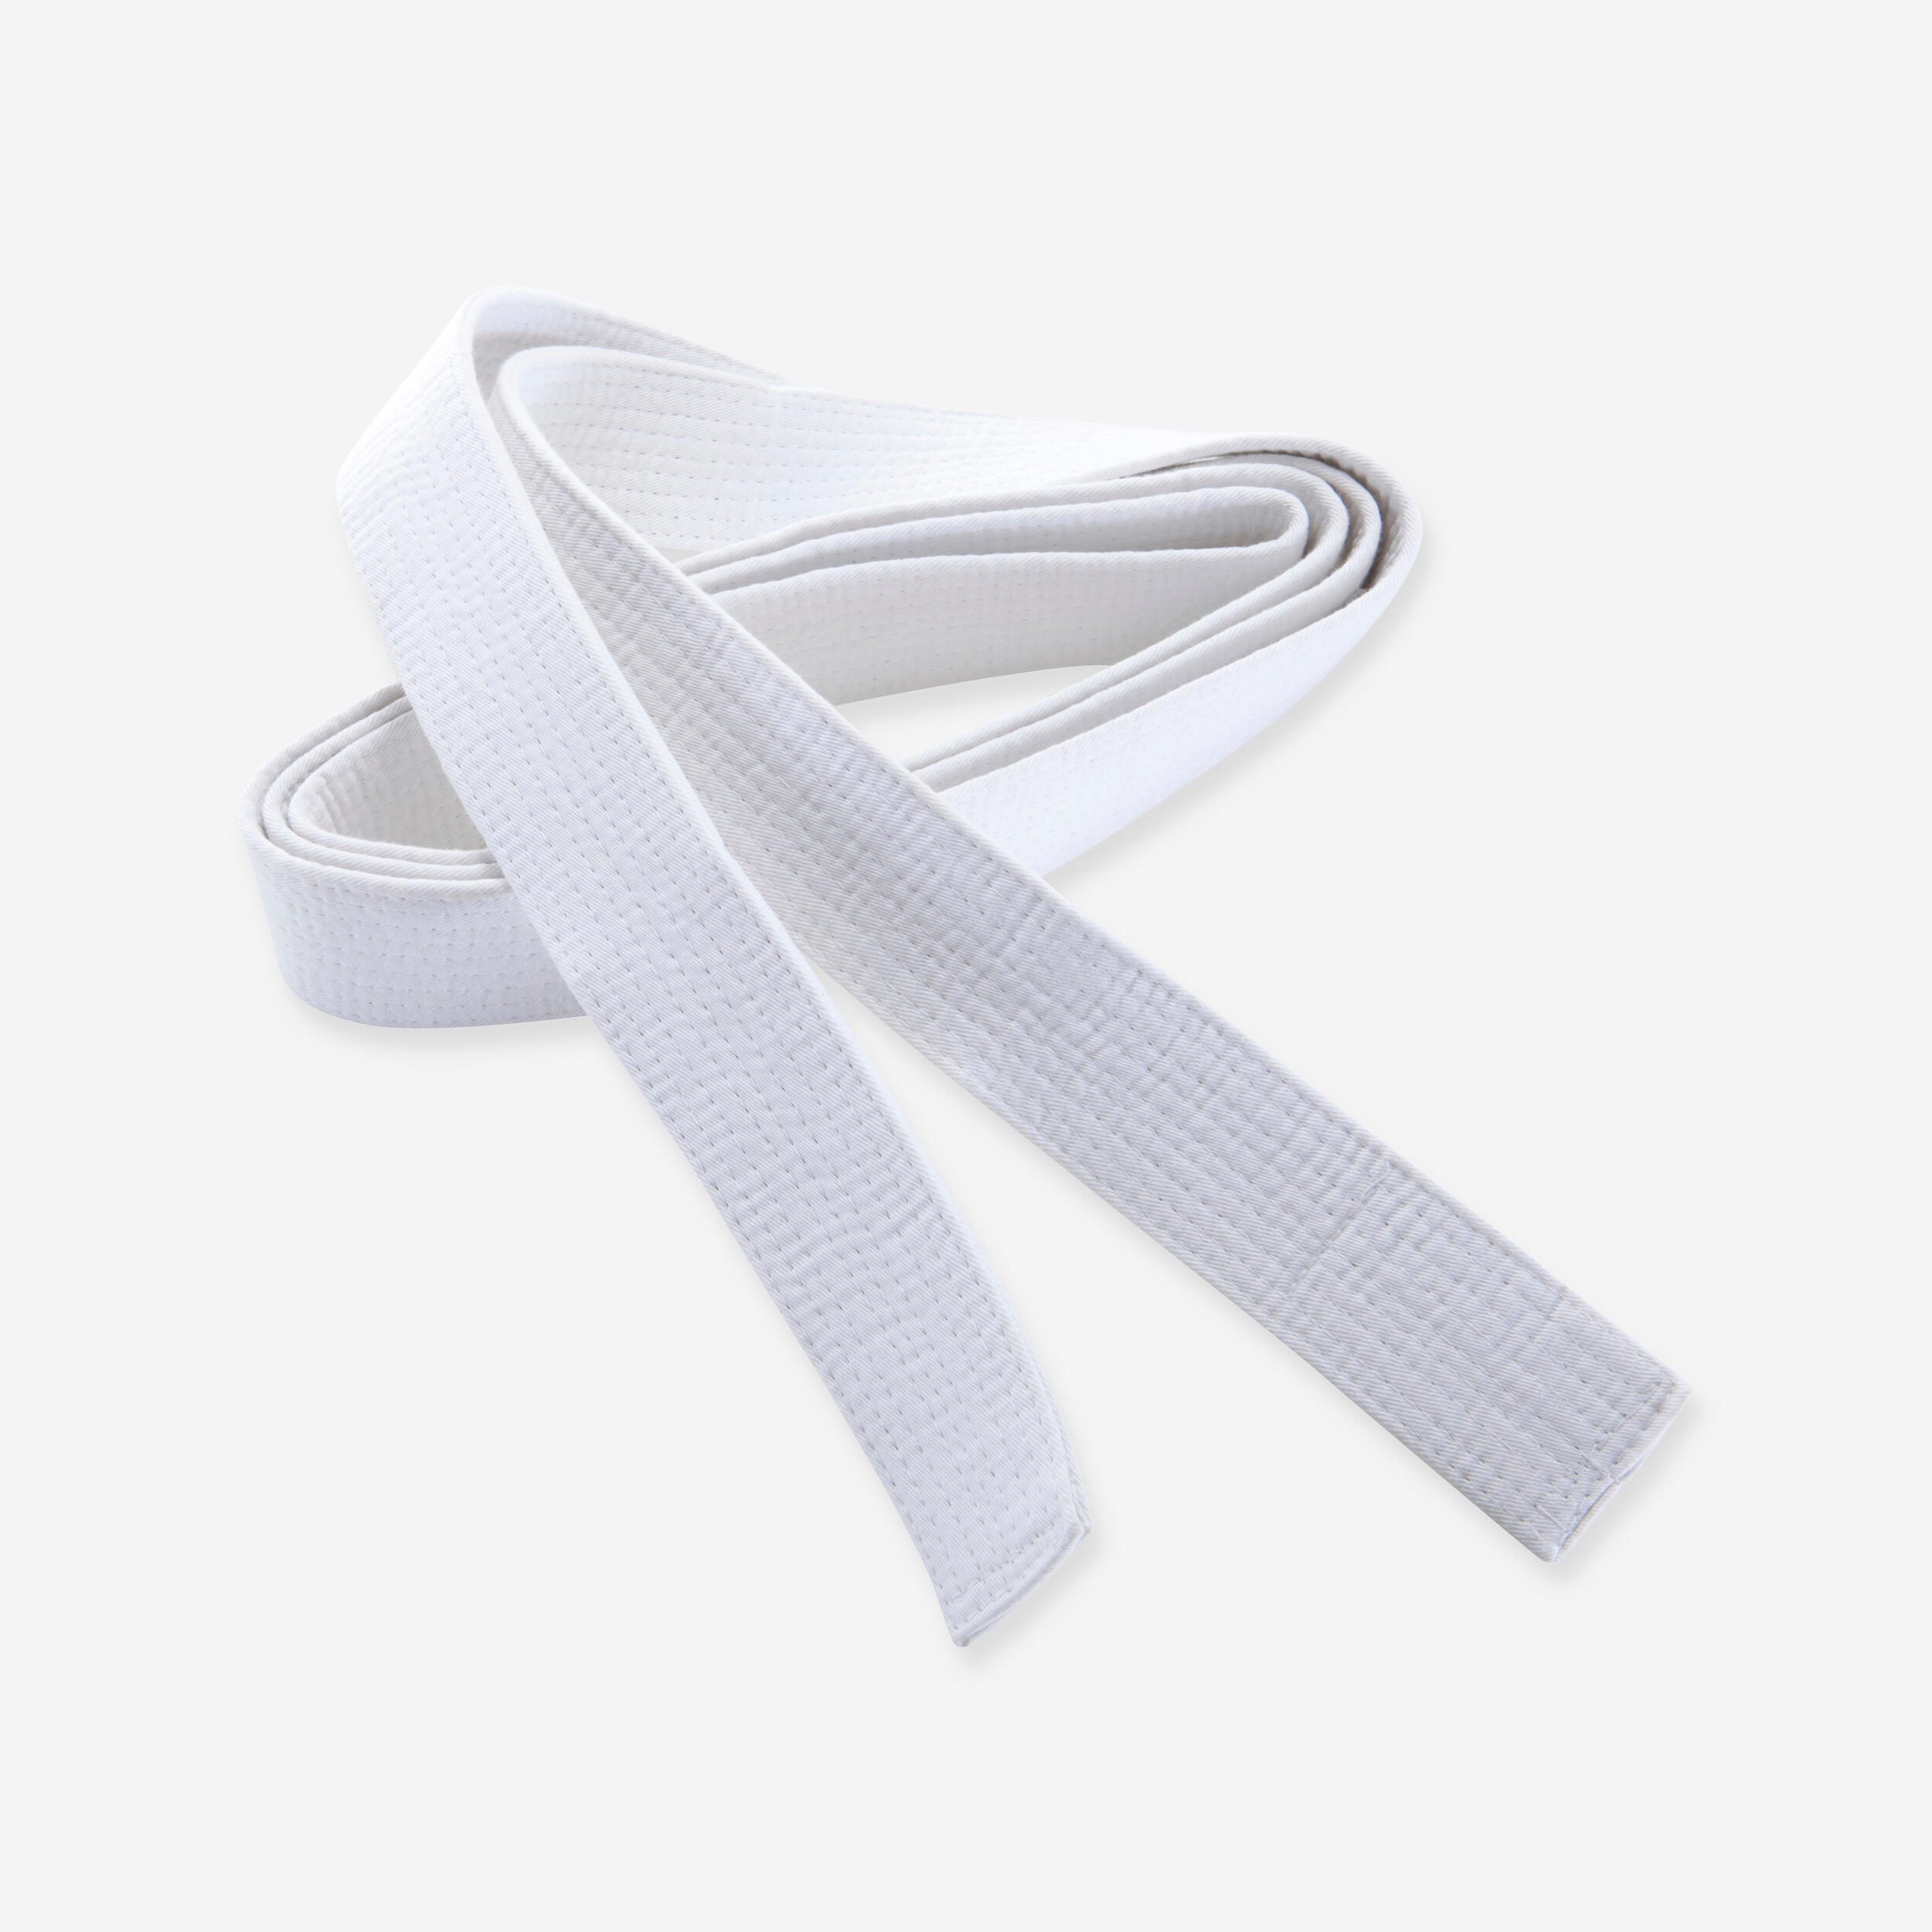 OUTSHOCK 2.5m Piqué Belt - White